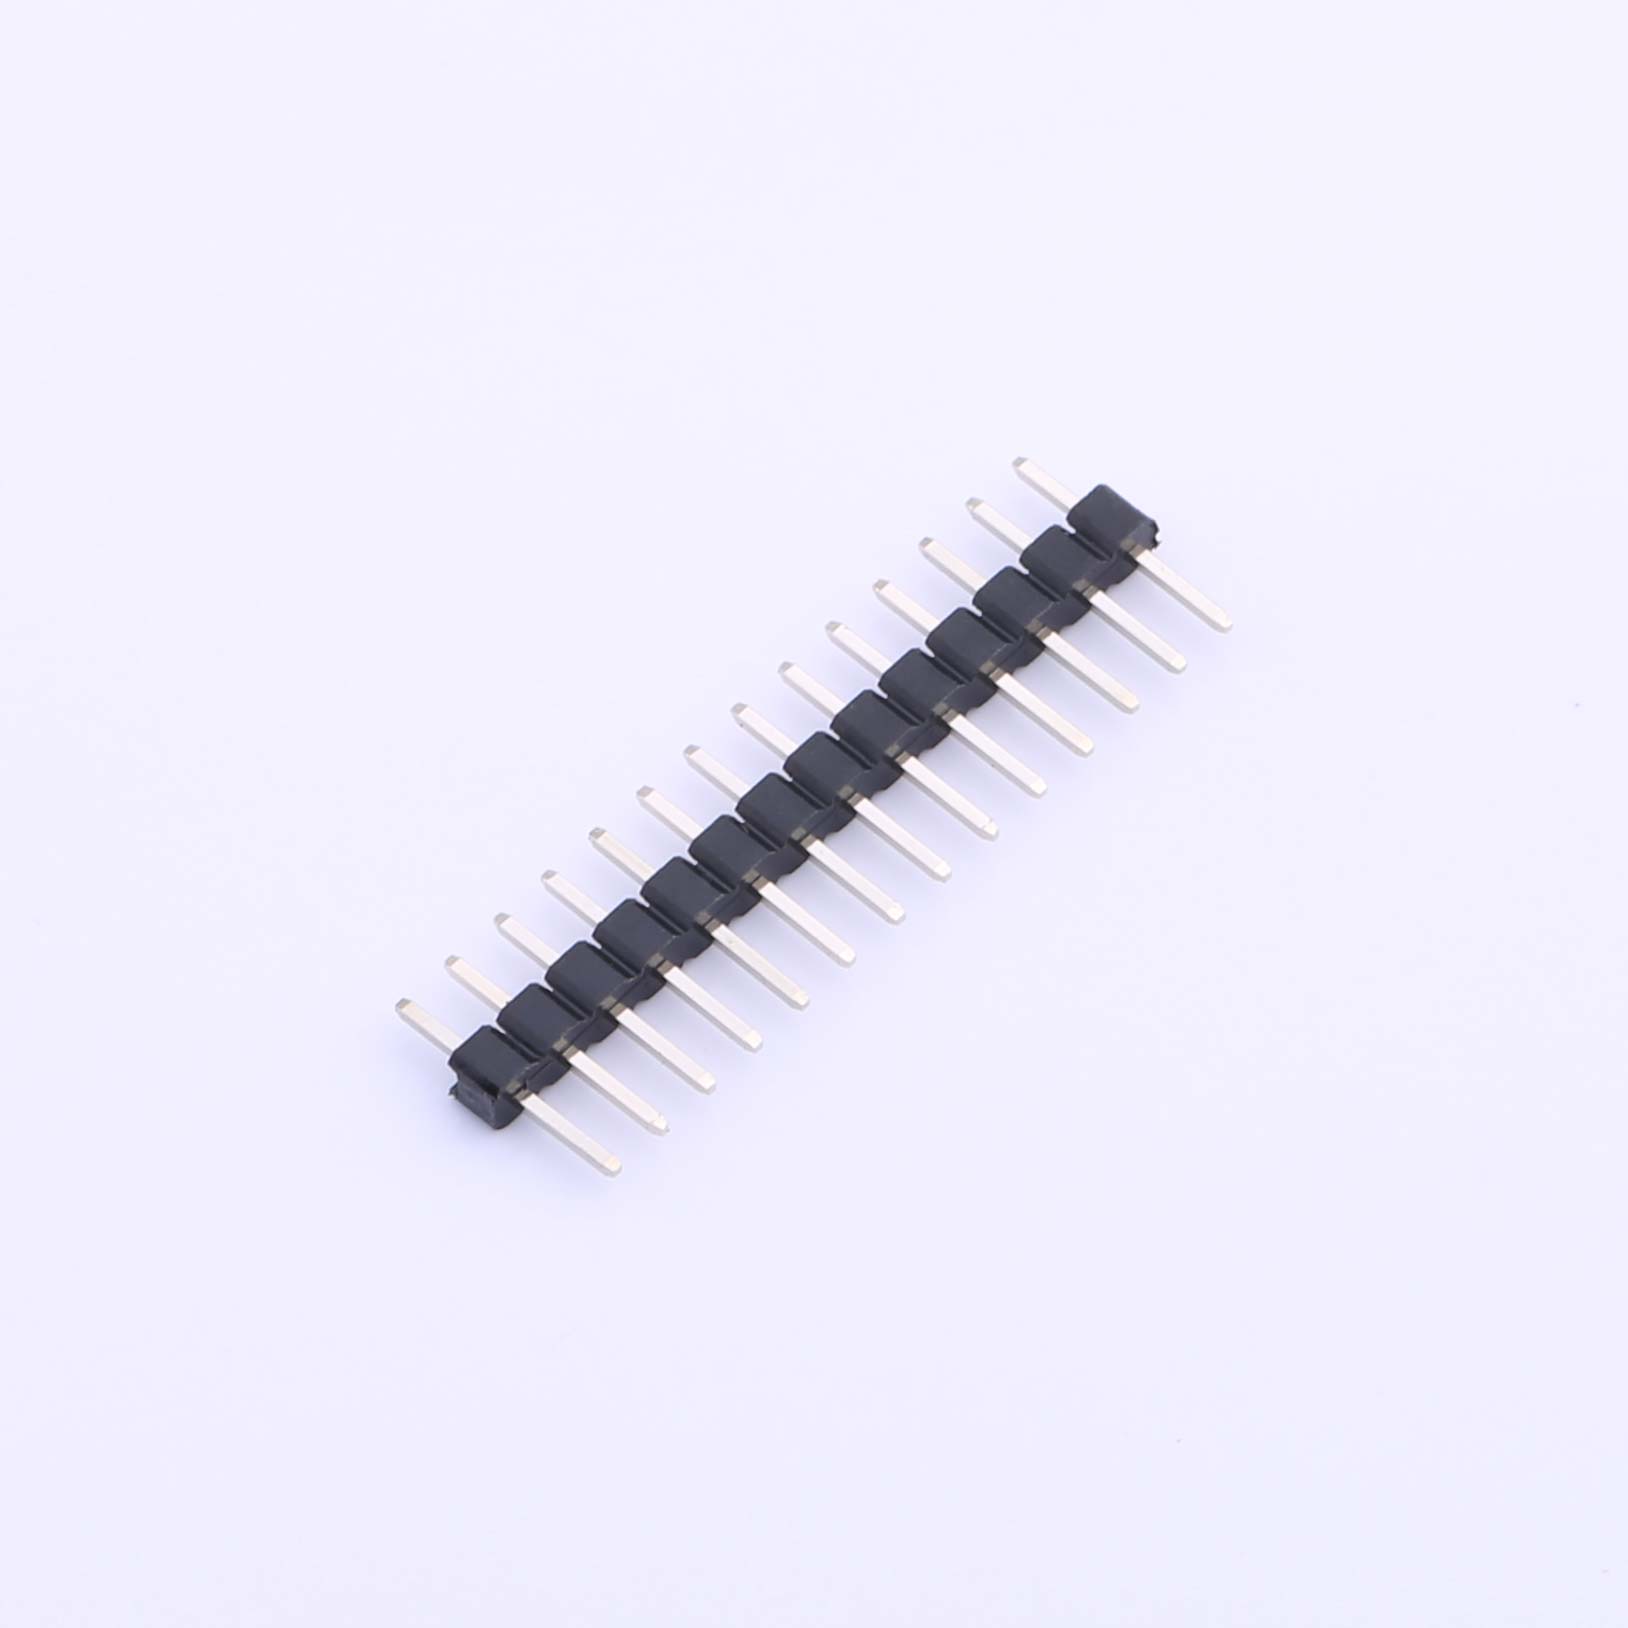 Kinghelm 2mm Pin Header Connector 14 Pin 1.5A - KH-2PH180-1X14P-L8.7